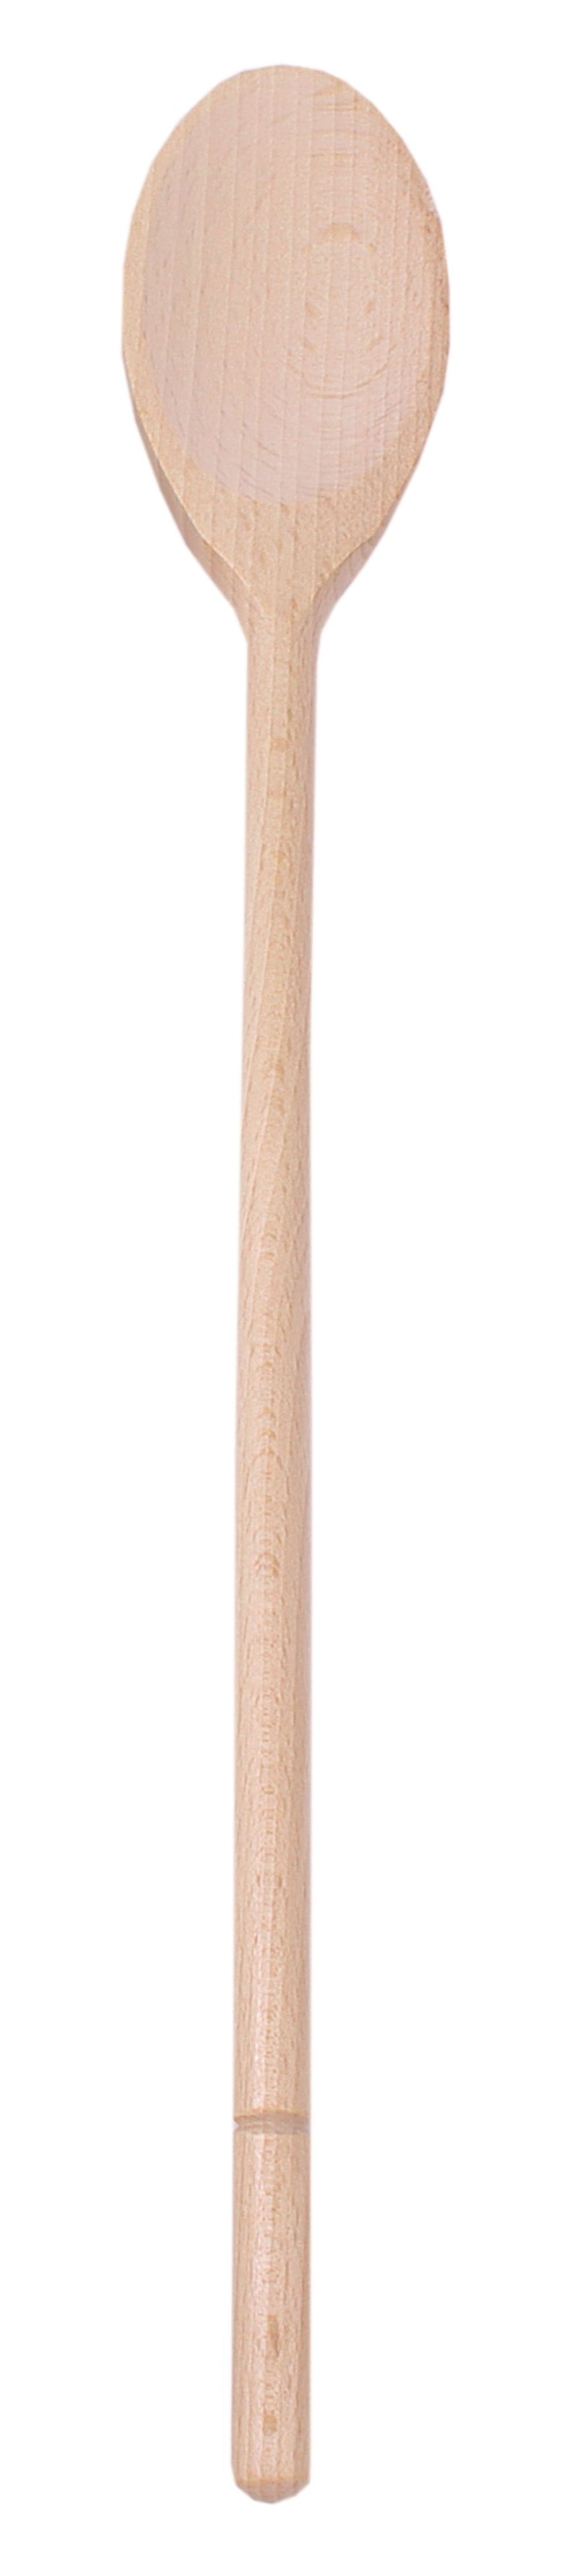 Mondo Wide Mouth Wooden Spoon 40cm 04KW942